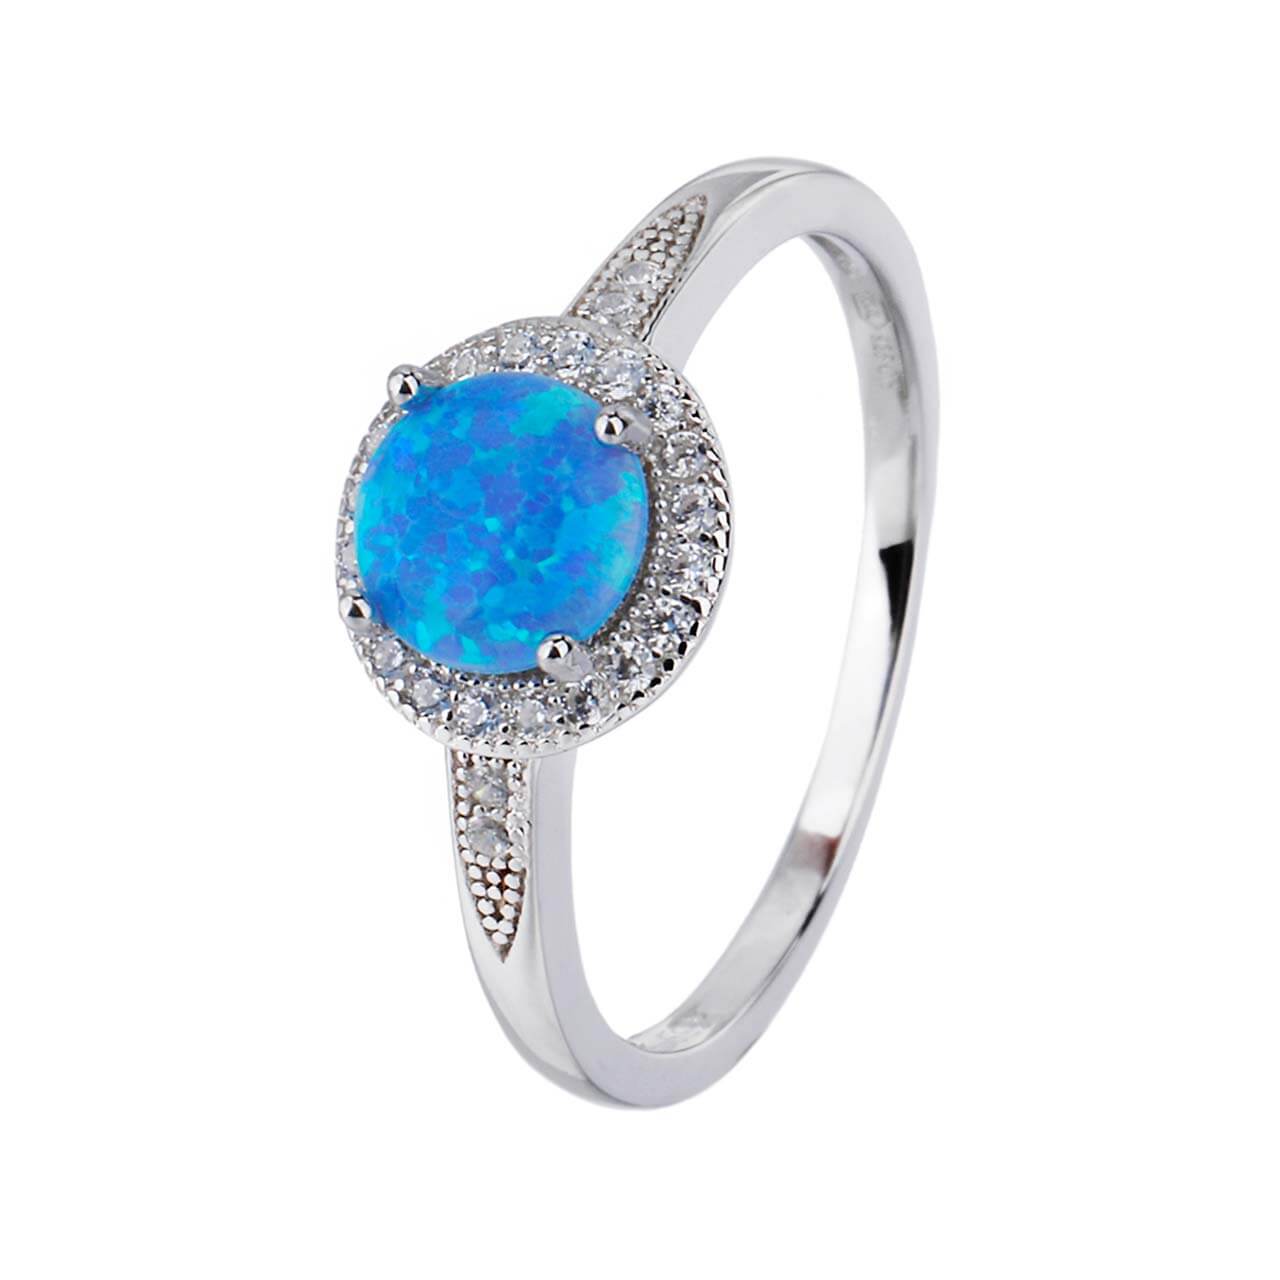 Stříbrný prsten SOLITÉR modrý OPÁL Velikost prstenu: 59 Ag 925/1000